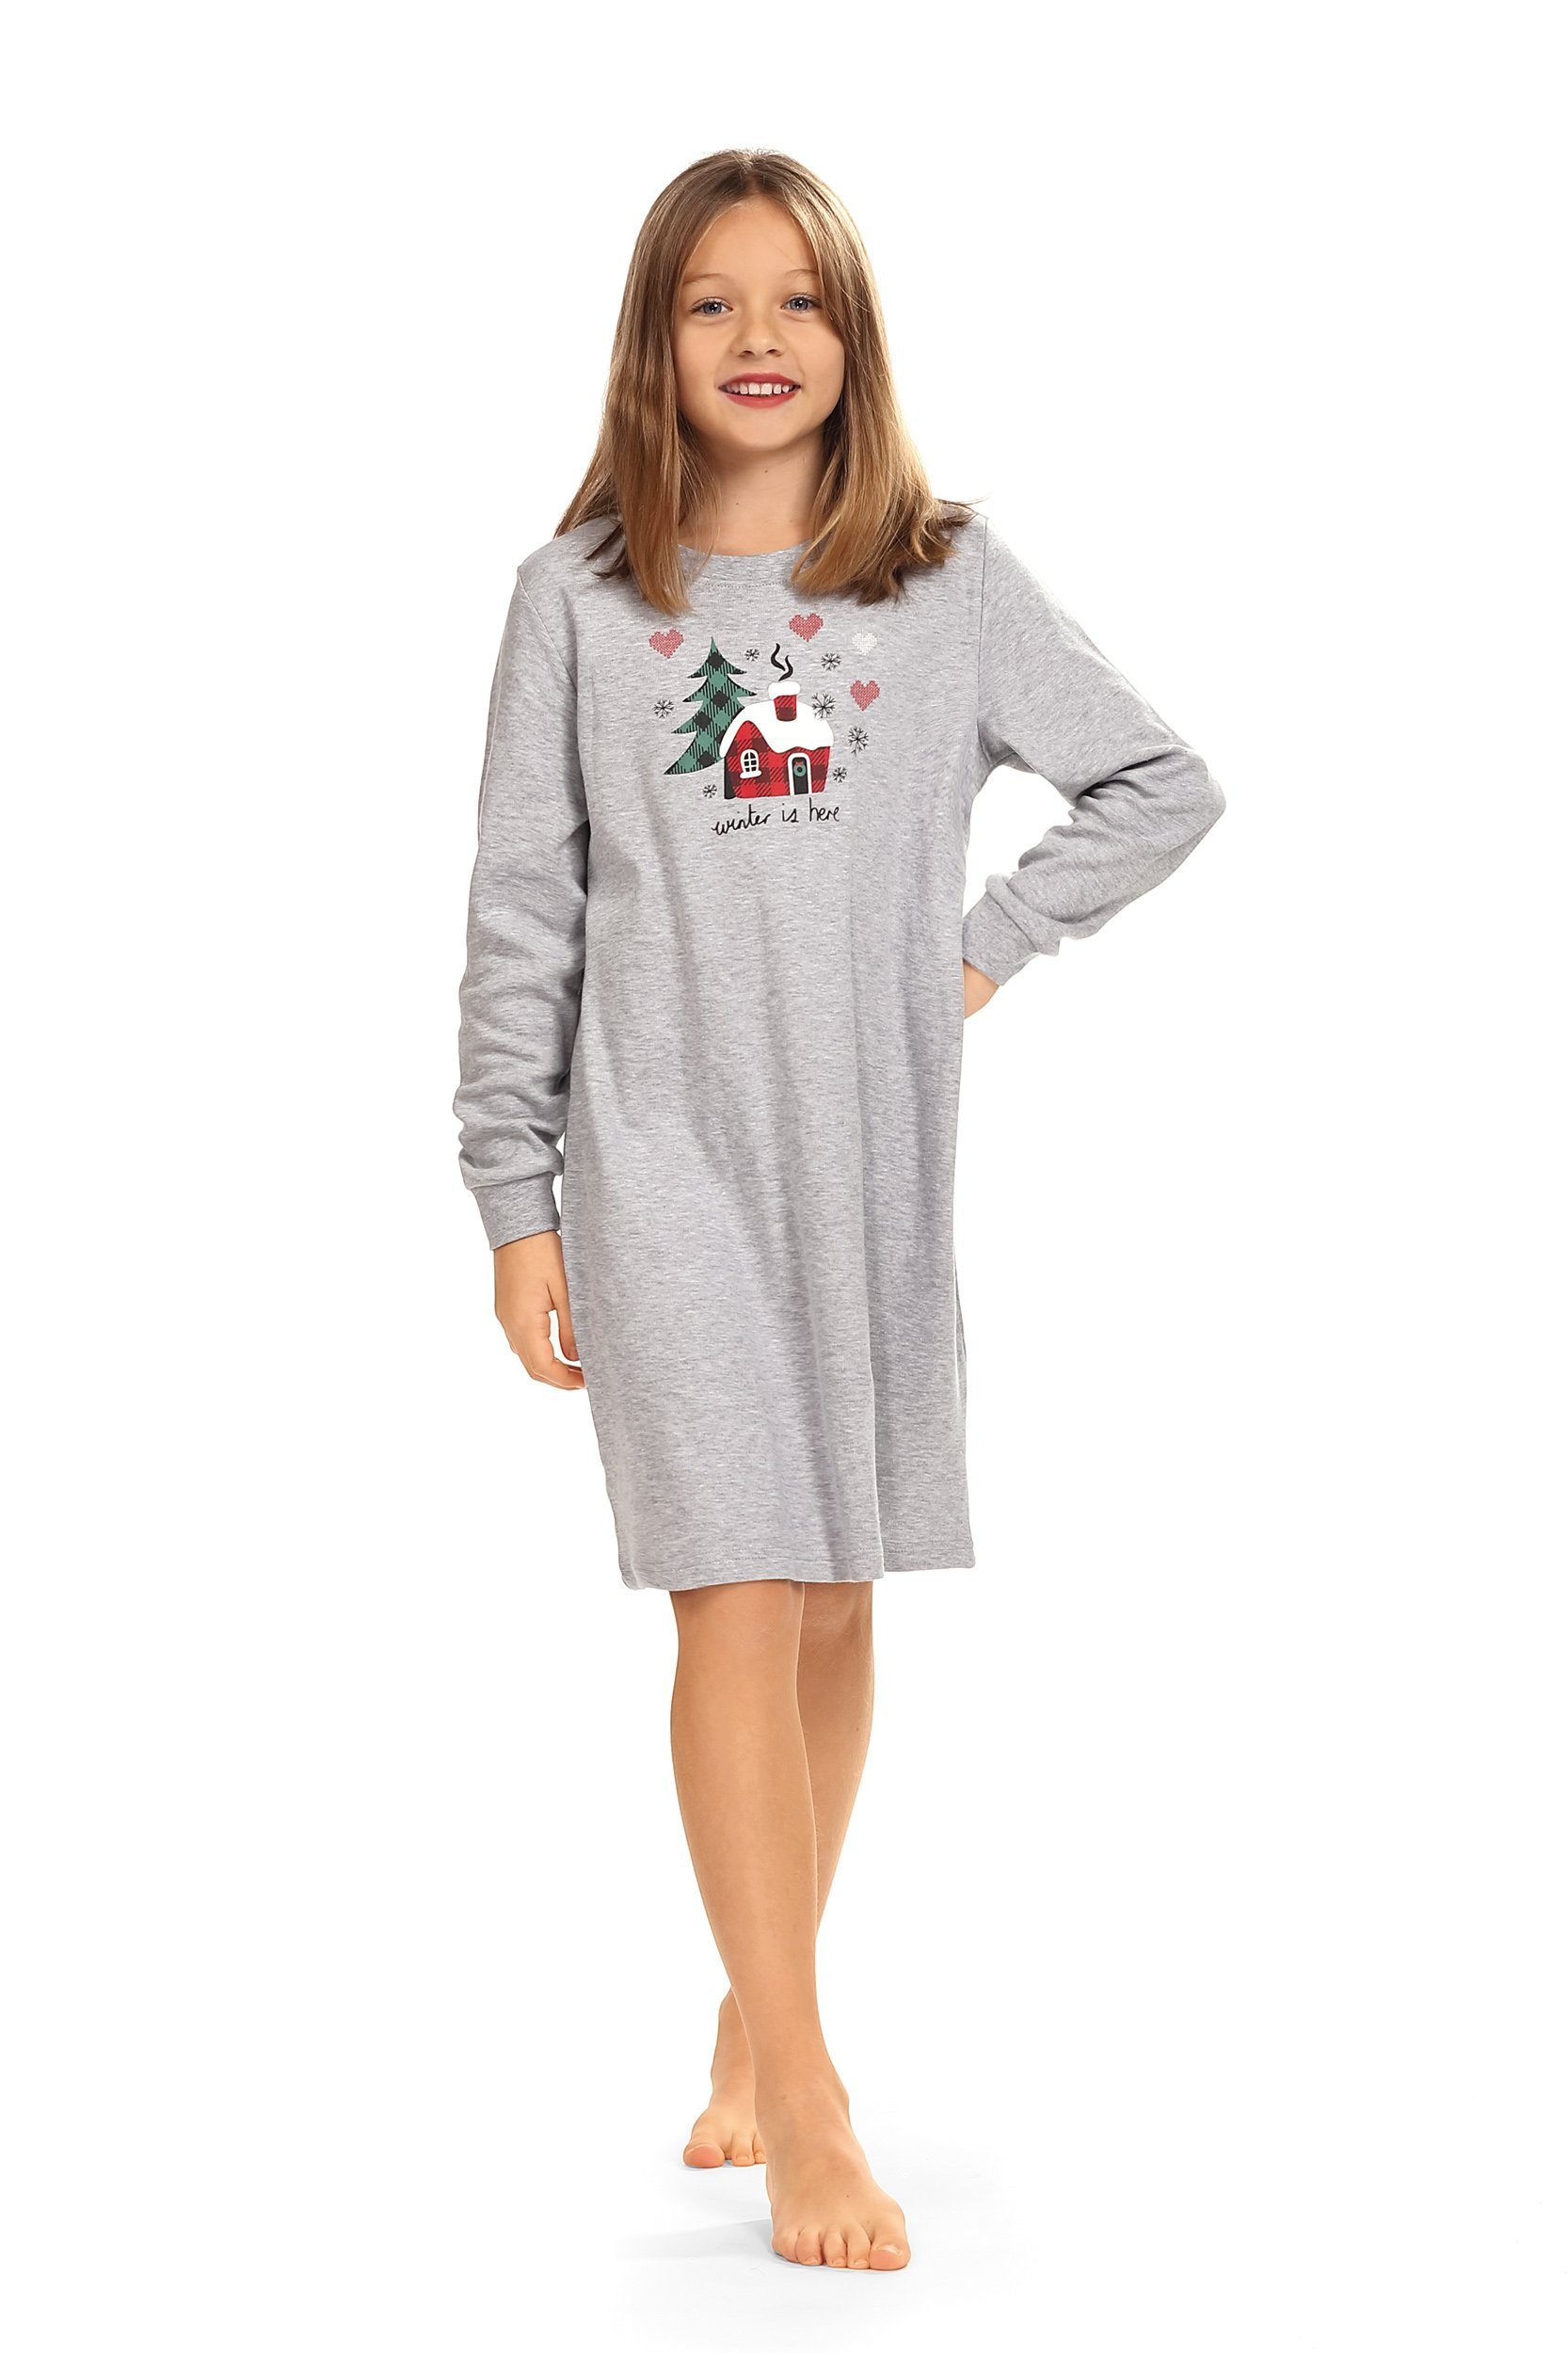 Top Qualität comtessa Nachthemd (Set, Mädchen Nachthemd Set) Kids Comte Baumwolle Pyjama 1-tlg., Sleepshirt